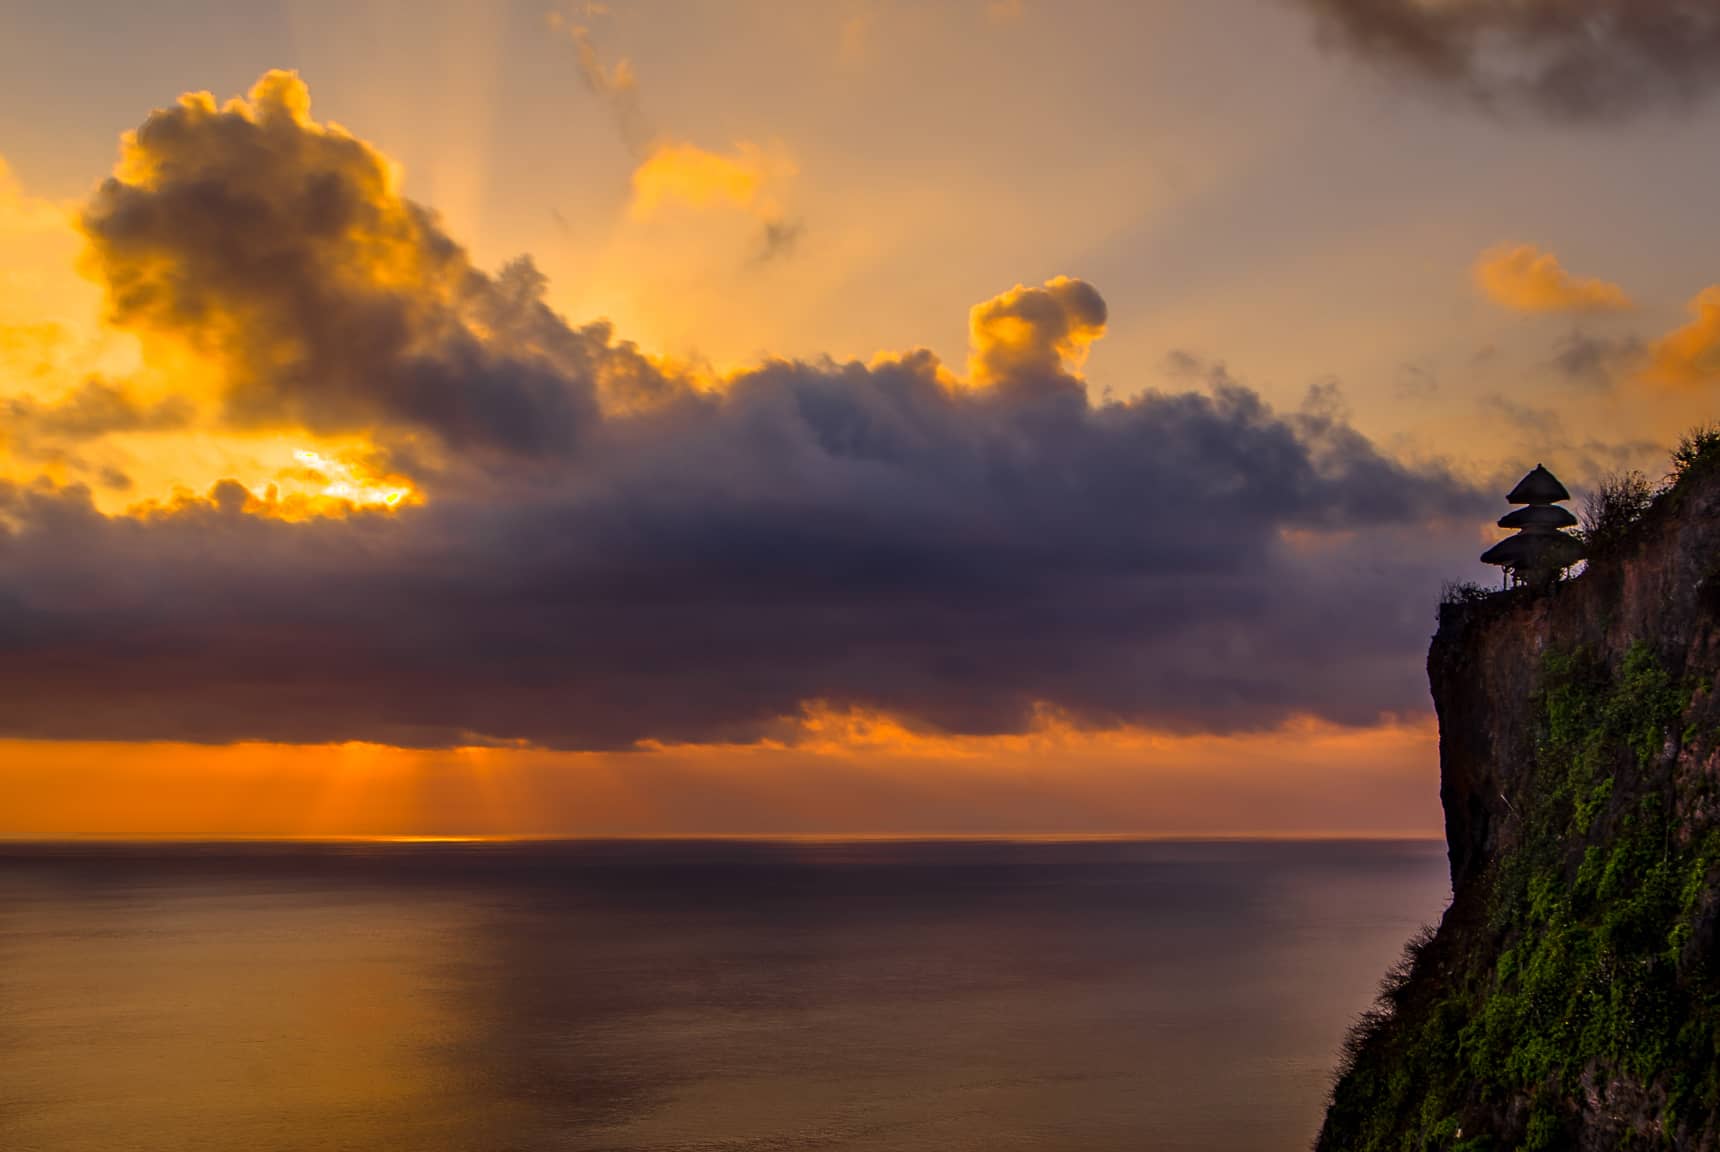 Professional photos of sunsets in Bali Indonesia - Uluwatu Temple